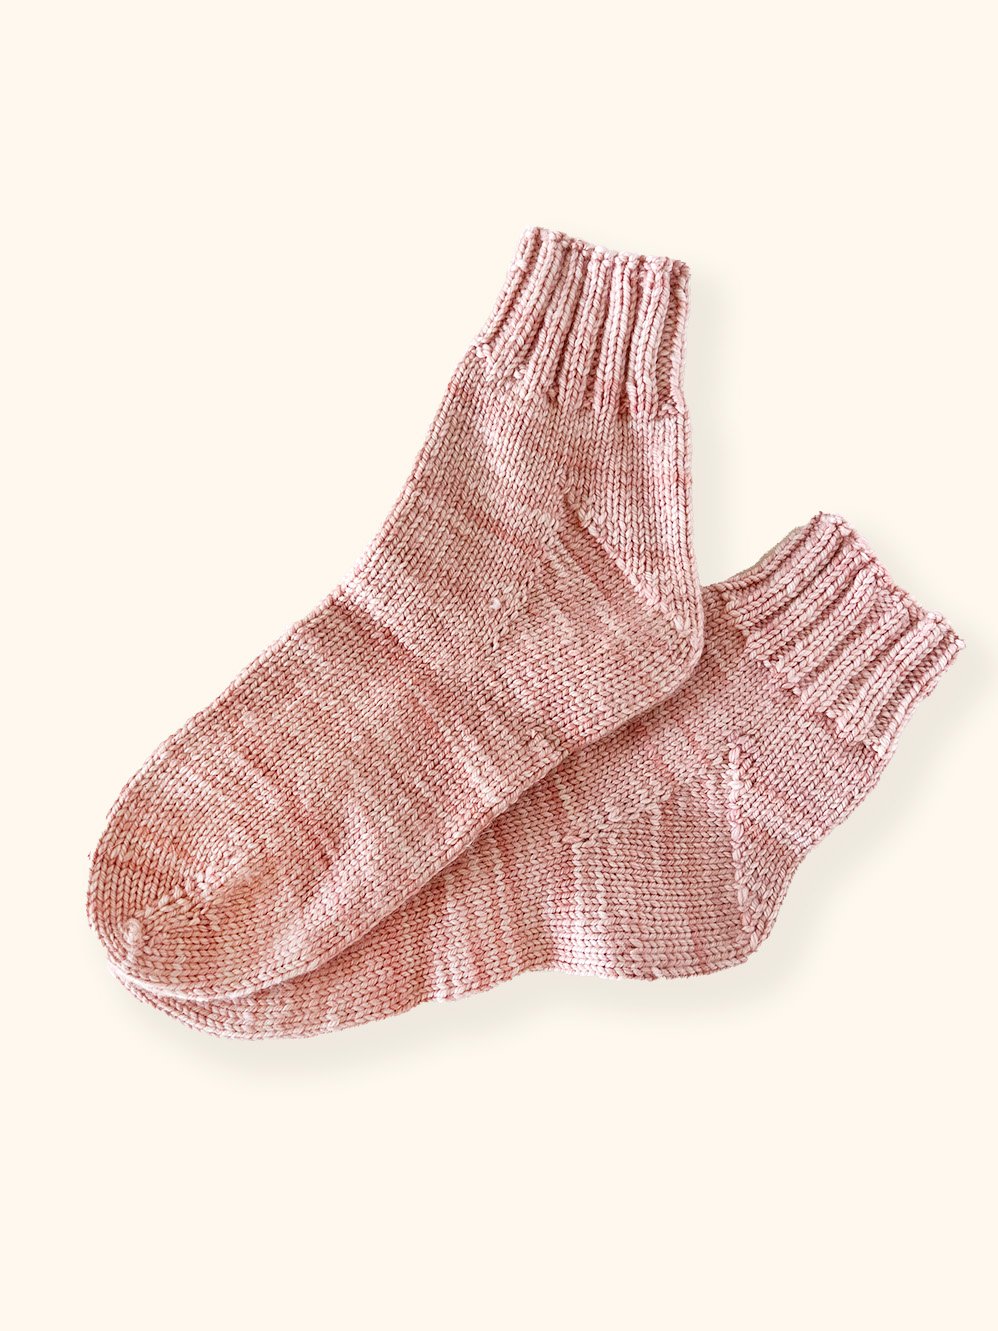 merino socks